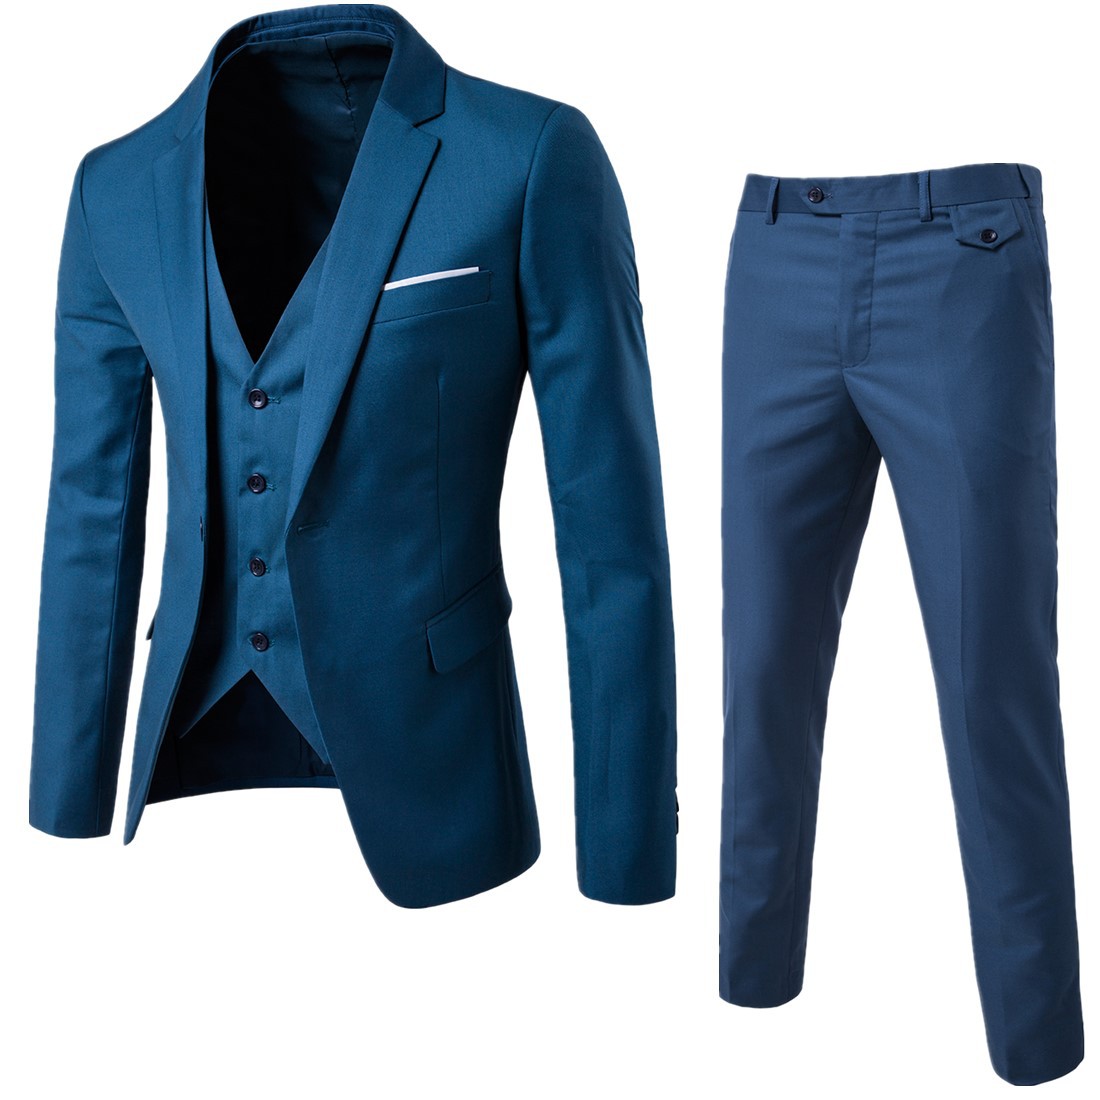 Casual suit, slim fit, Korean youth suit, one suit, men's formal coat, top, autumn trend, handsome